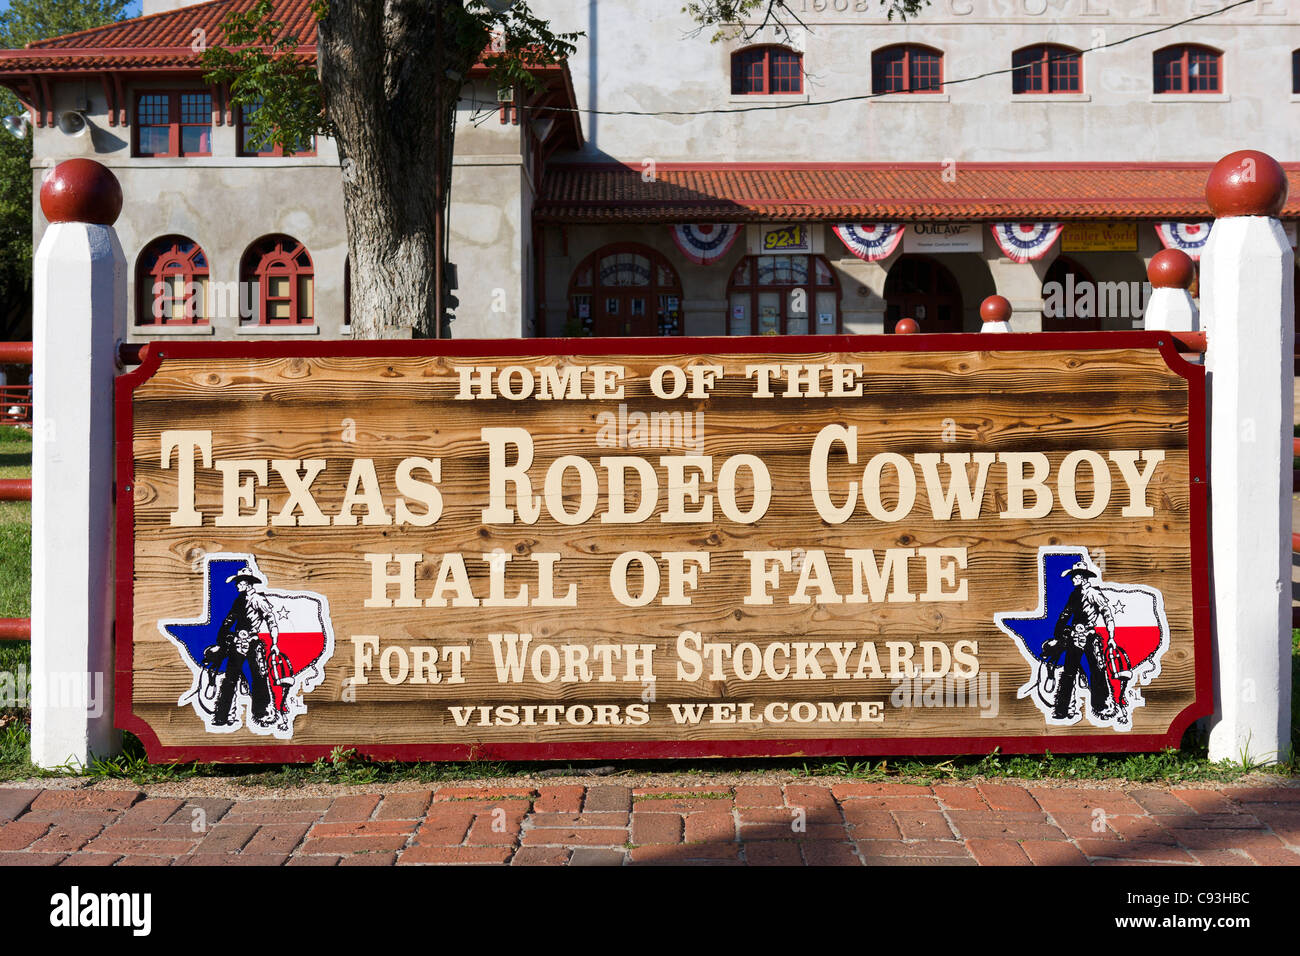 Texas Rodeo Cowboy Hall of Fame im Cowtown Coliseum, Exchange Avenue, Stockyards Bezirk, Fort Worth, Texas, USA Stockfoto